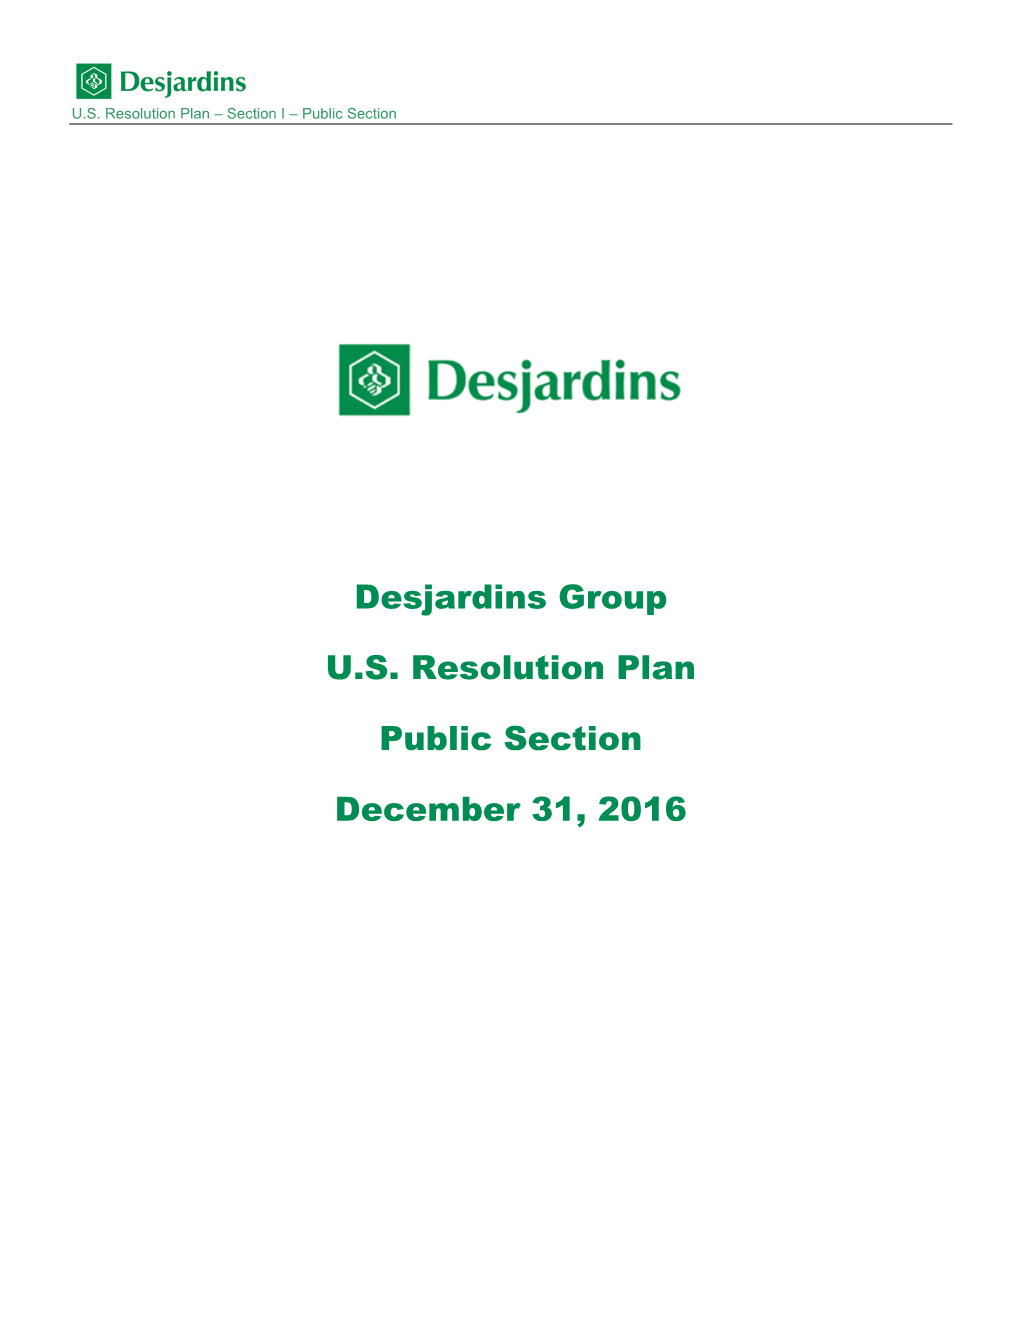 Desjardins Group U.S. Resolution Plan Public Section